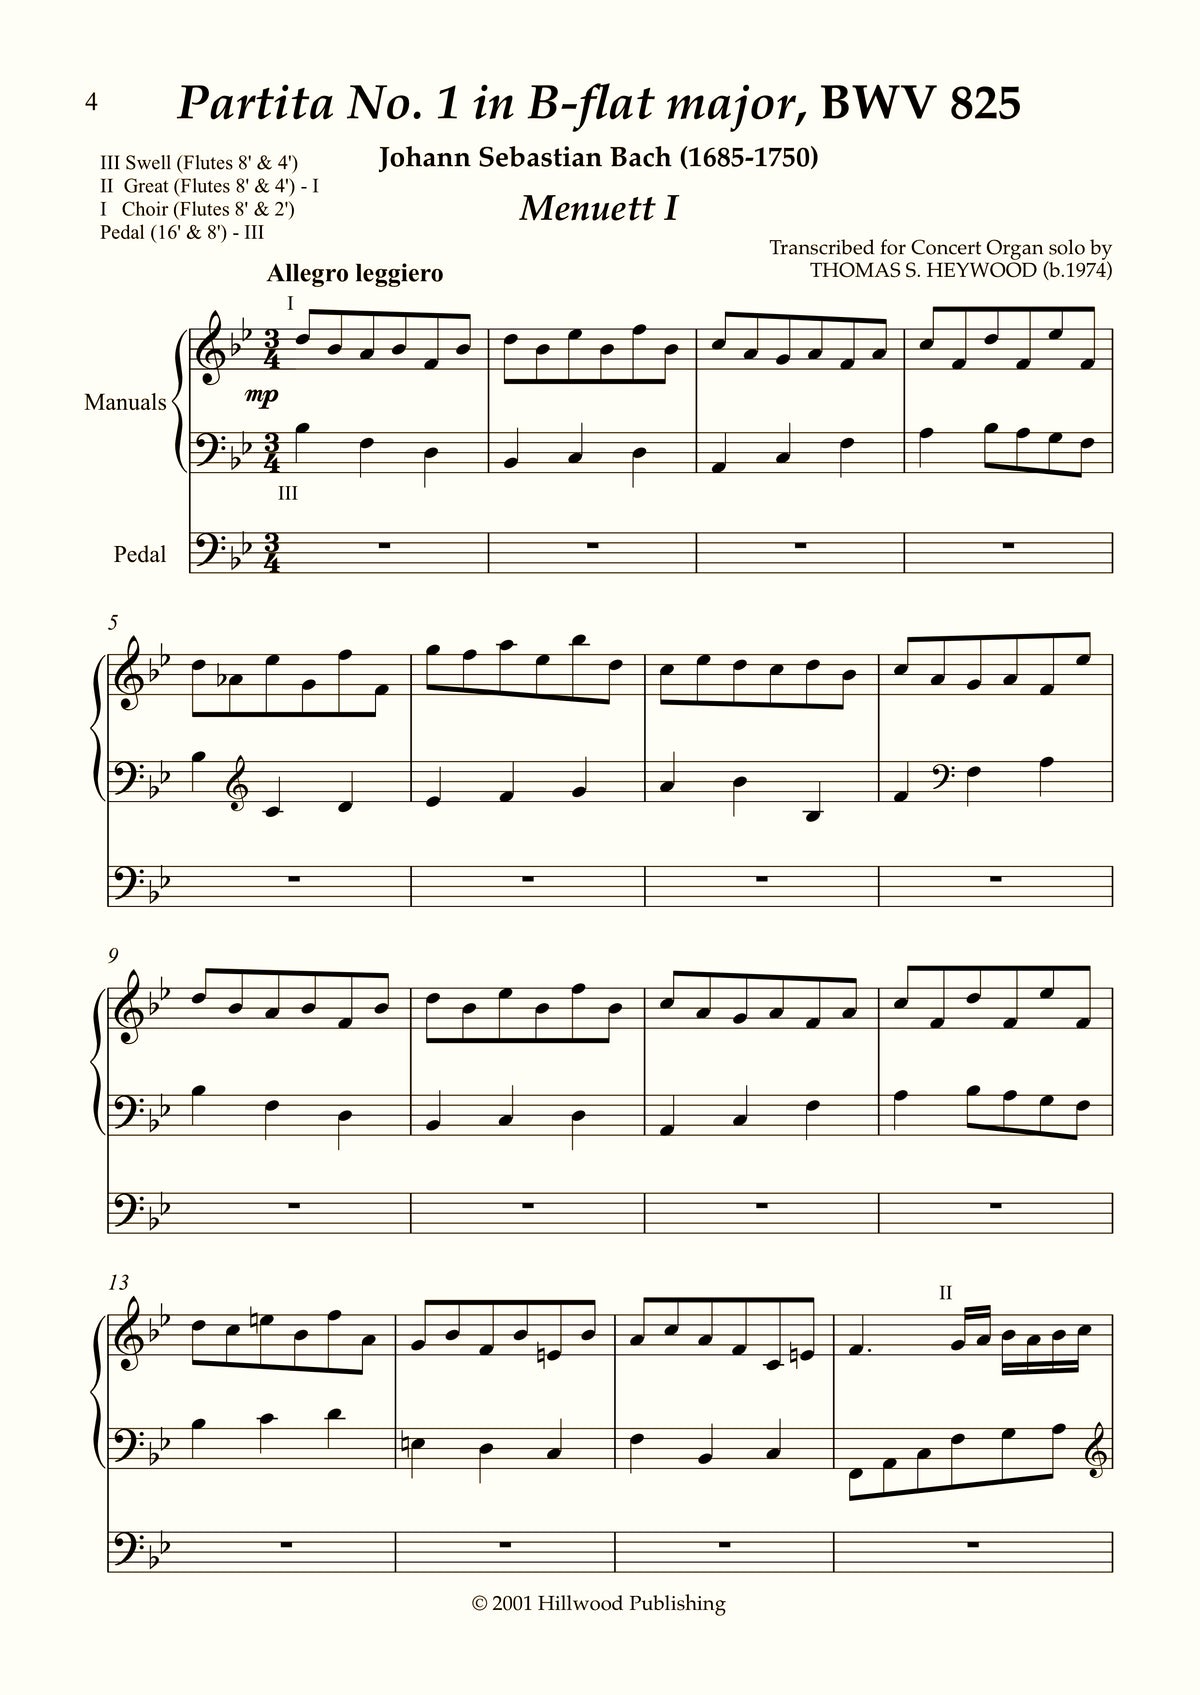 Bach/Heywood - Menuett I & II from Partita No. 1 in B-flat major, BWV 825 (Score) | Thomas Heywood | Concert Organ International